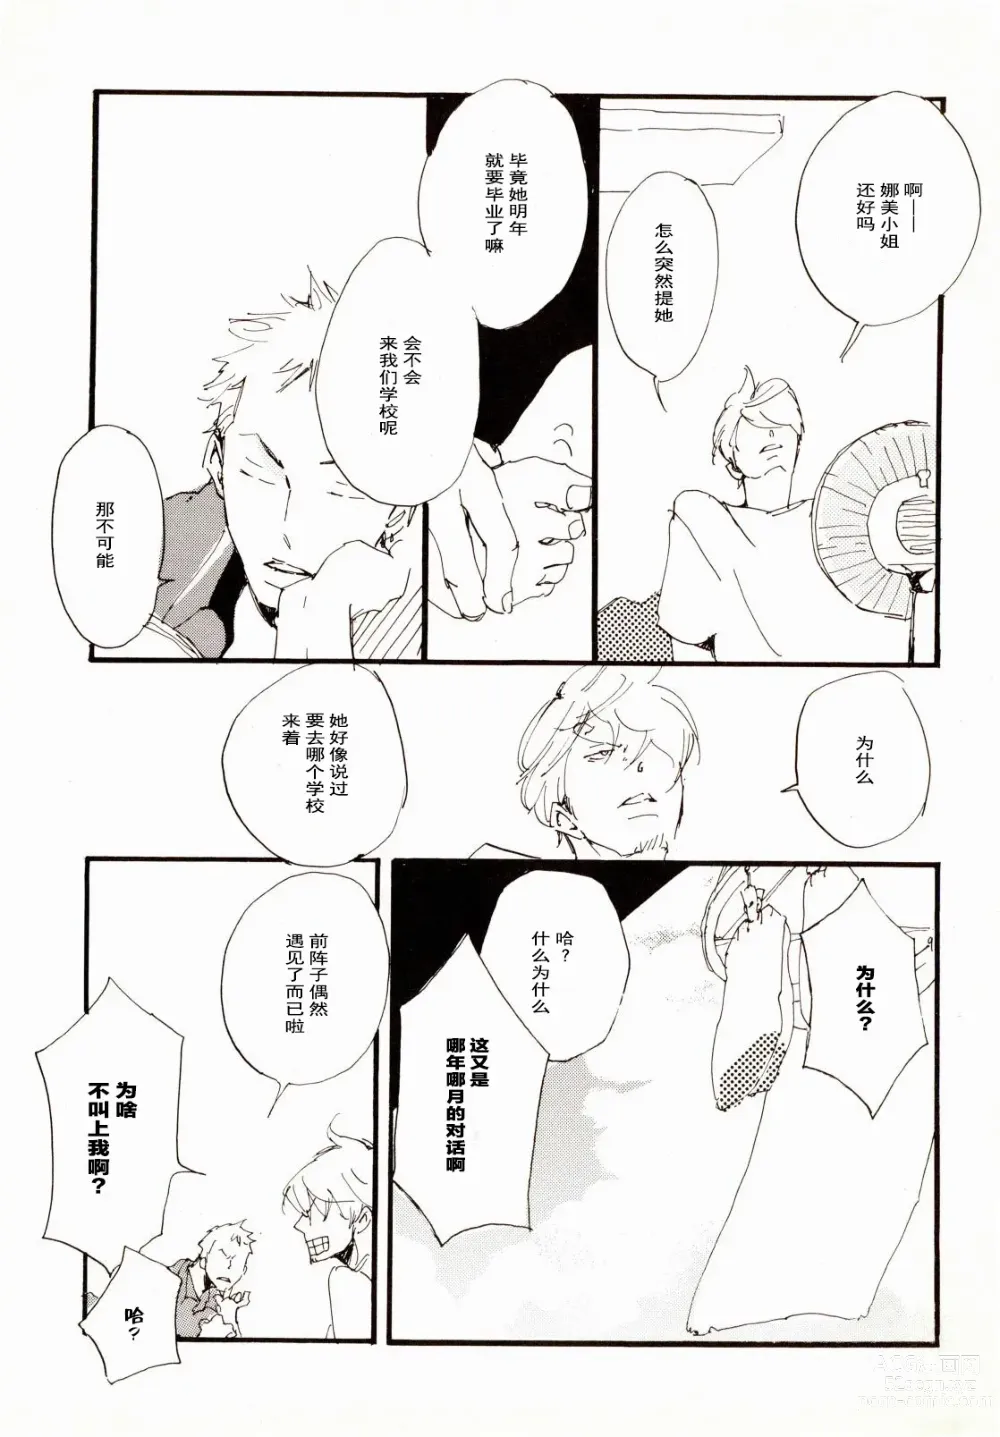 Page 6 of doujinshi 百年夏日。